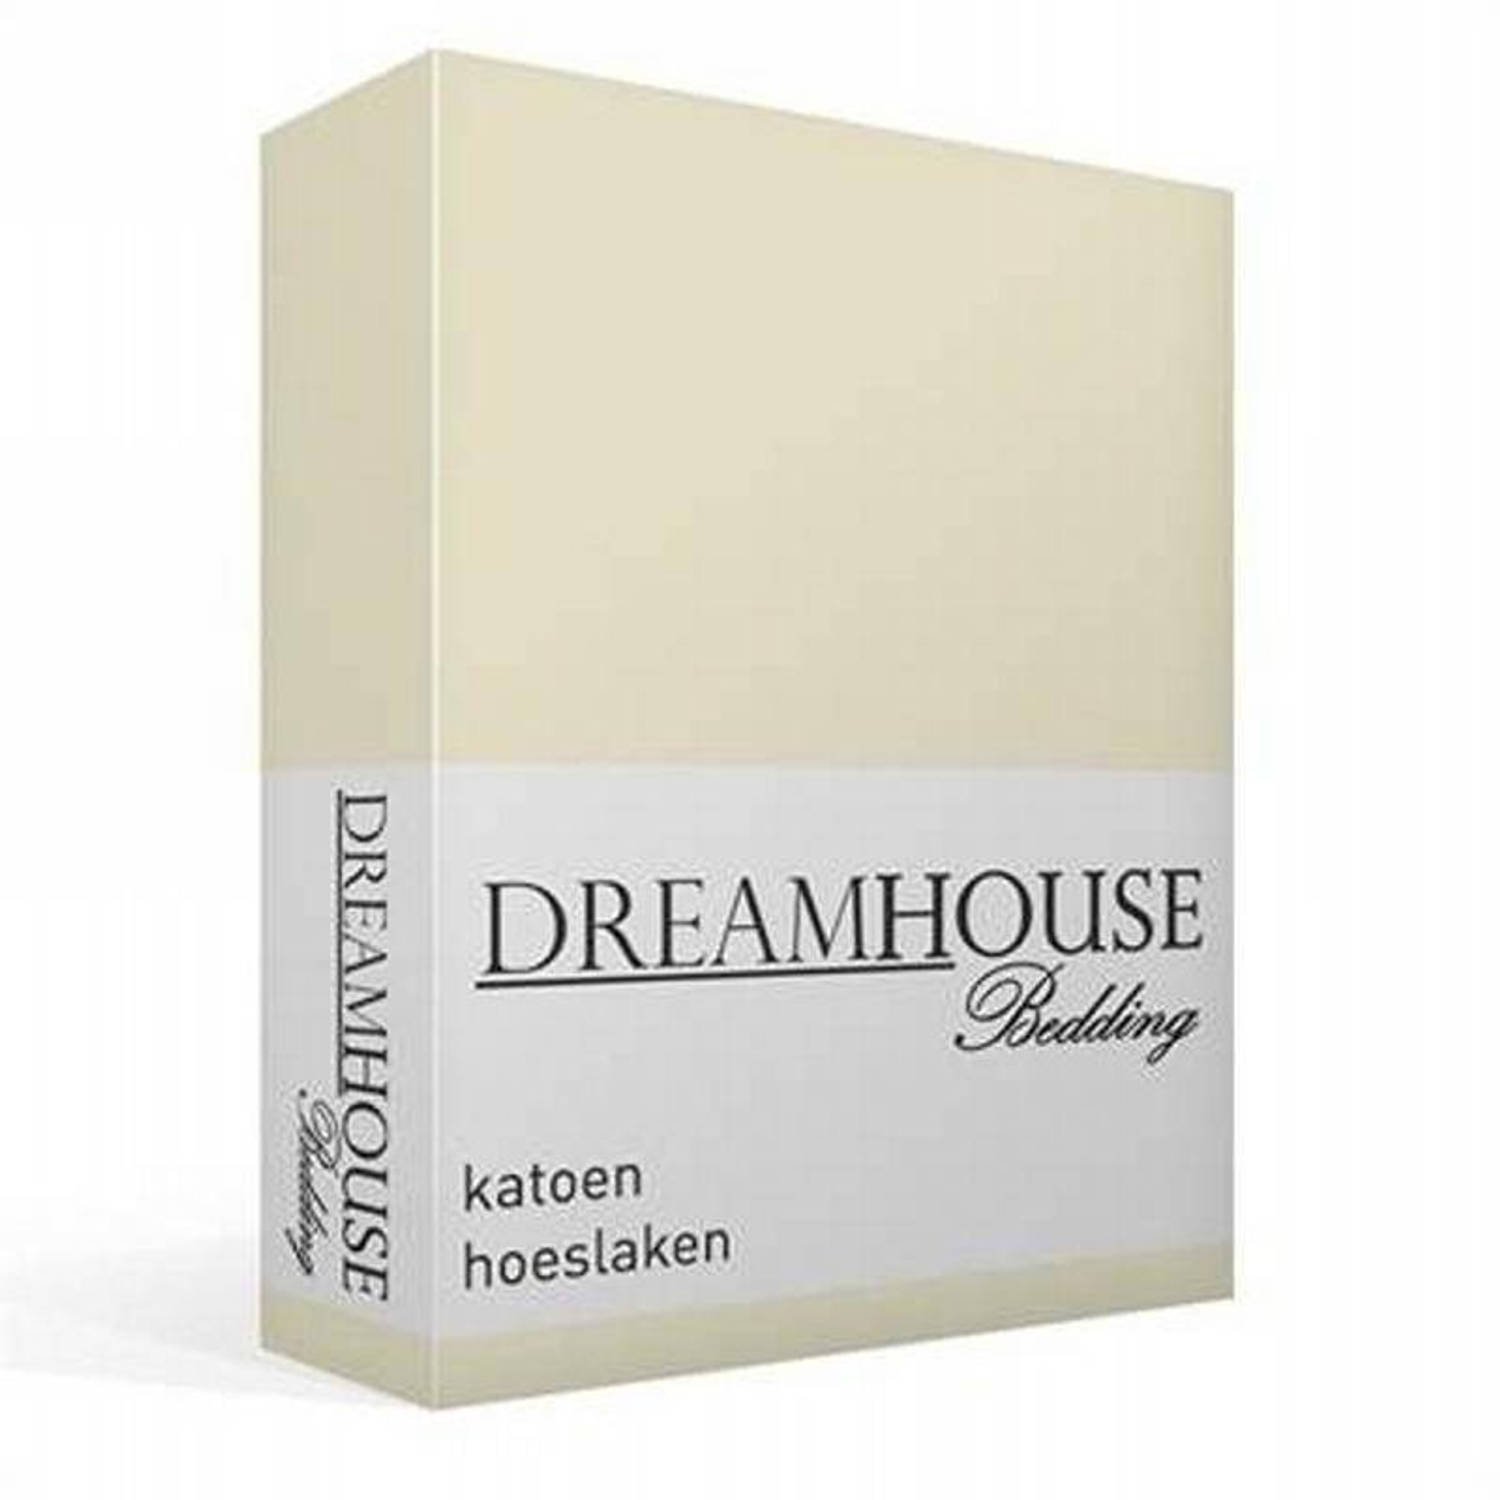 Dreamhouse Bedding katoen hoeslaken - 100% katoen - Lits-jumeaux (160x220 cm) - Zand, Creme - Geel